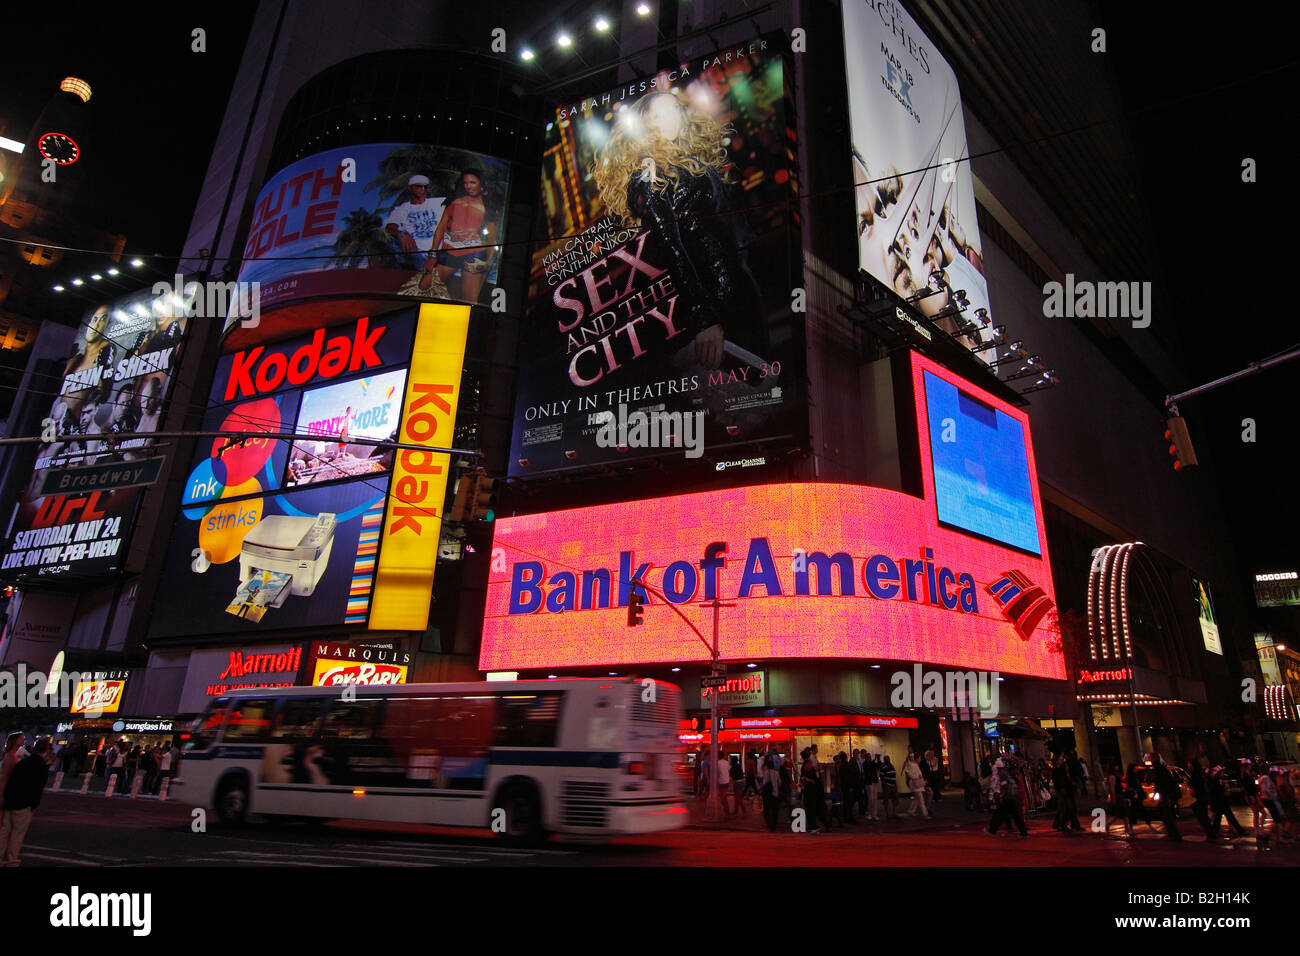 Times Square lights at night - New York City, USA Stock Photo